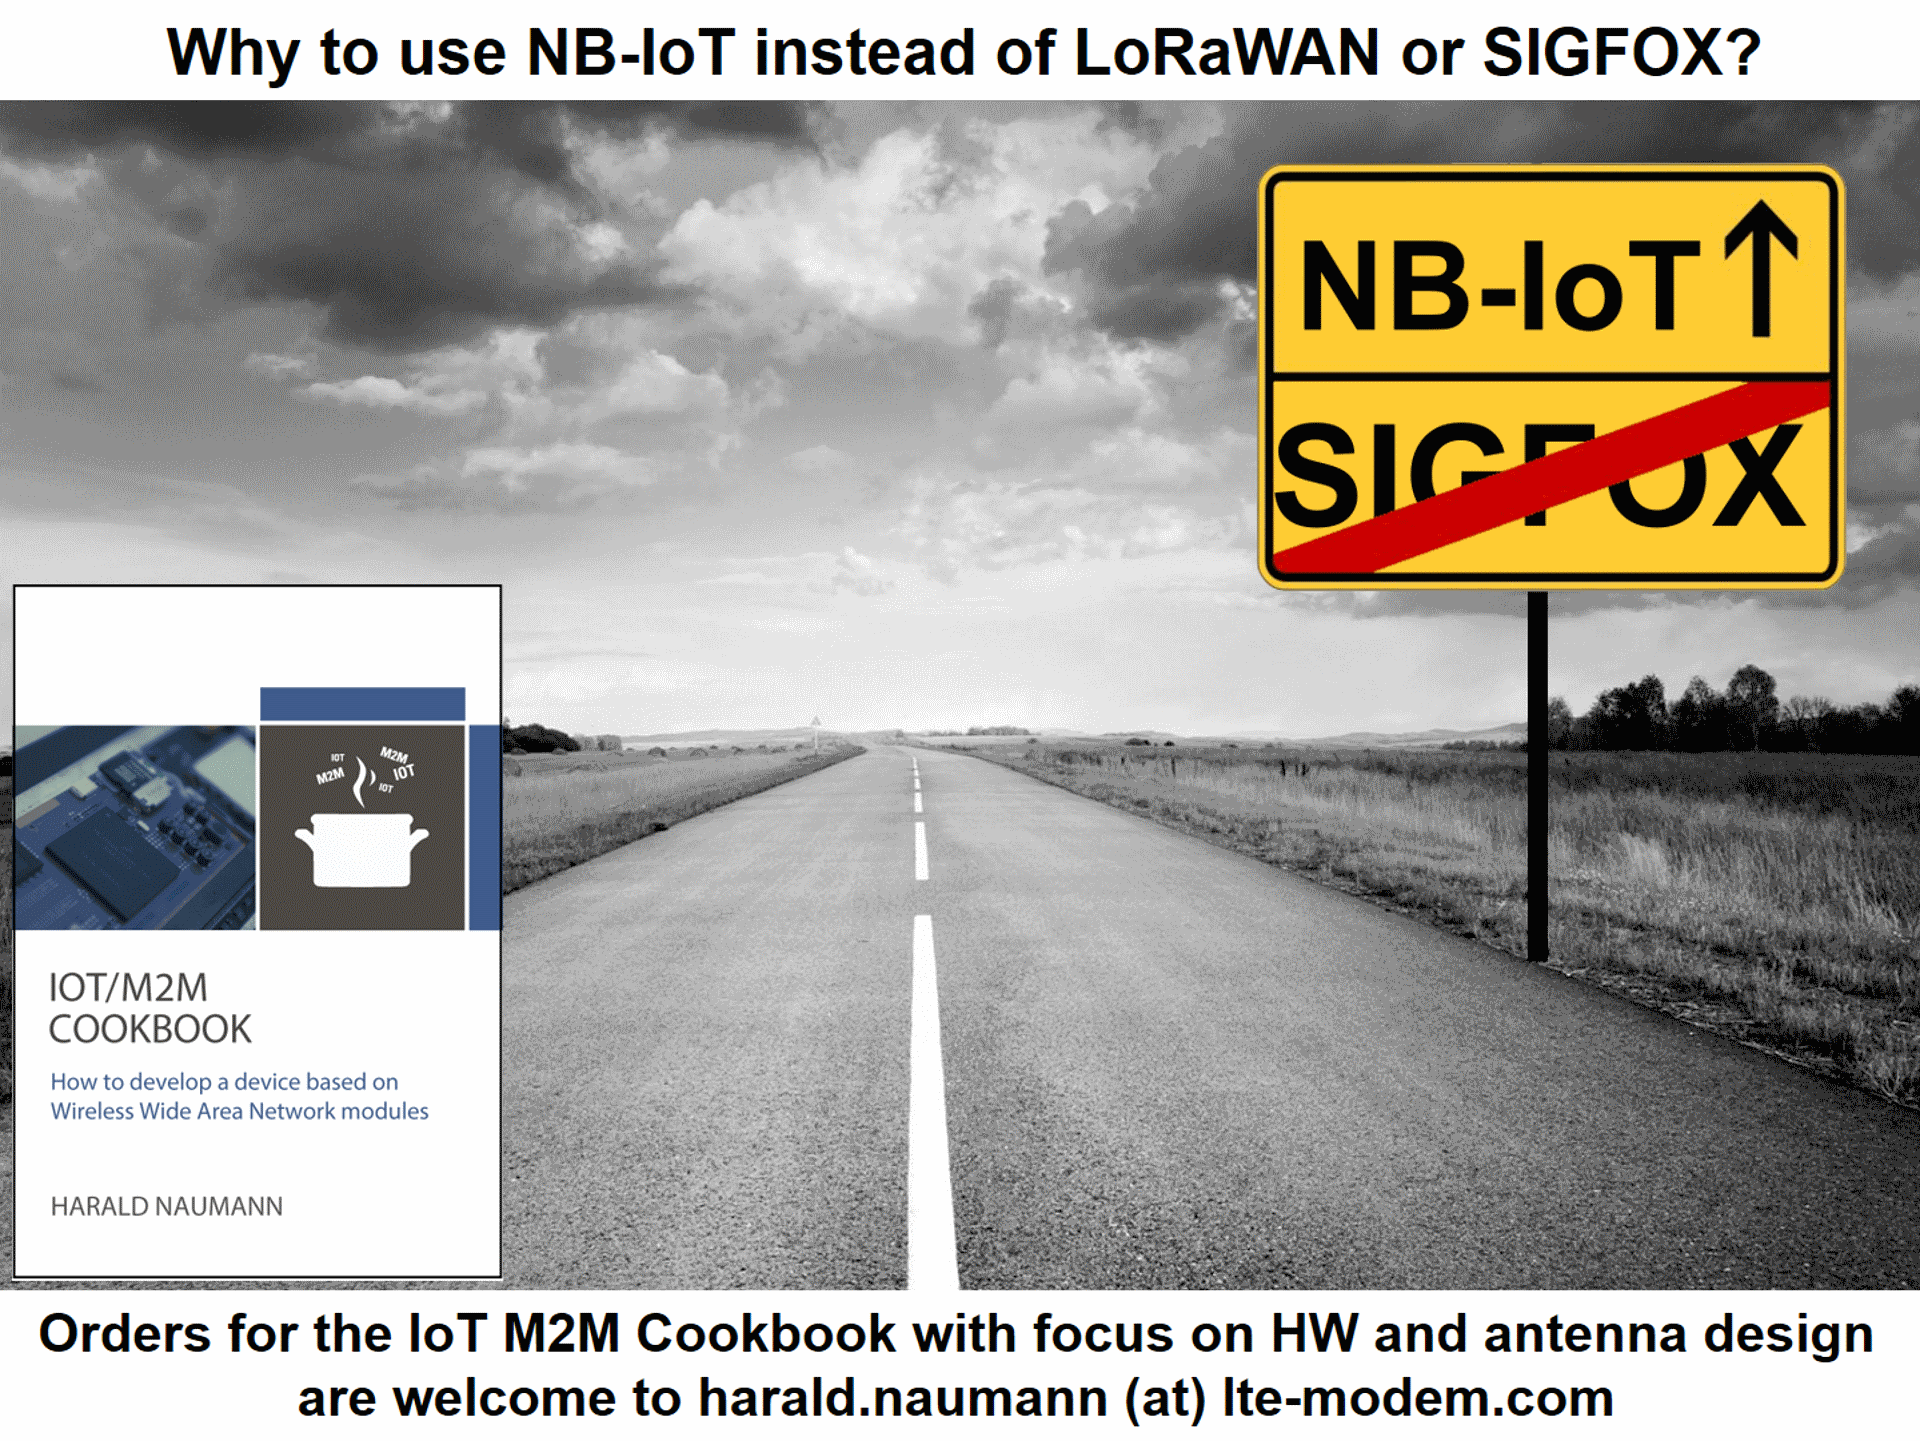 Why NB-IoT instead or LoRaWAN and Sigfox